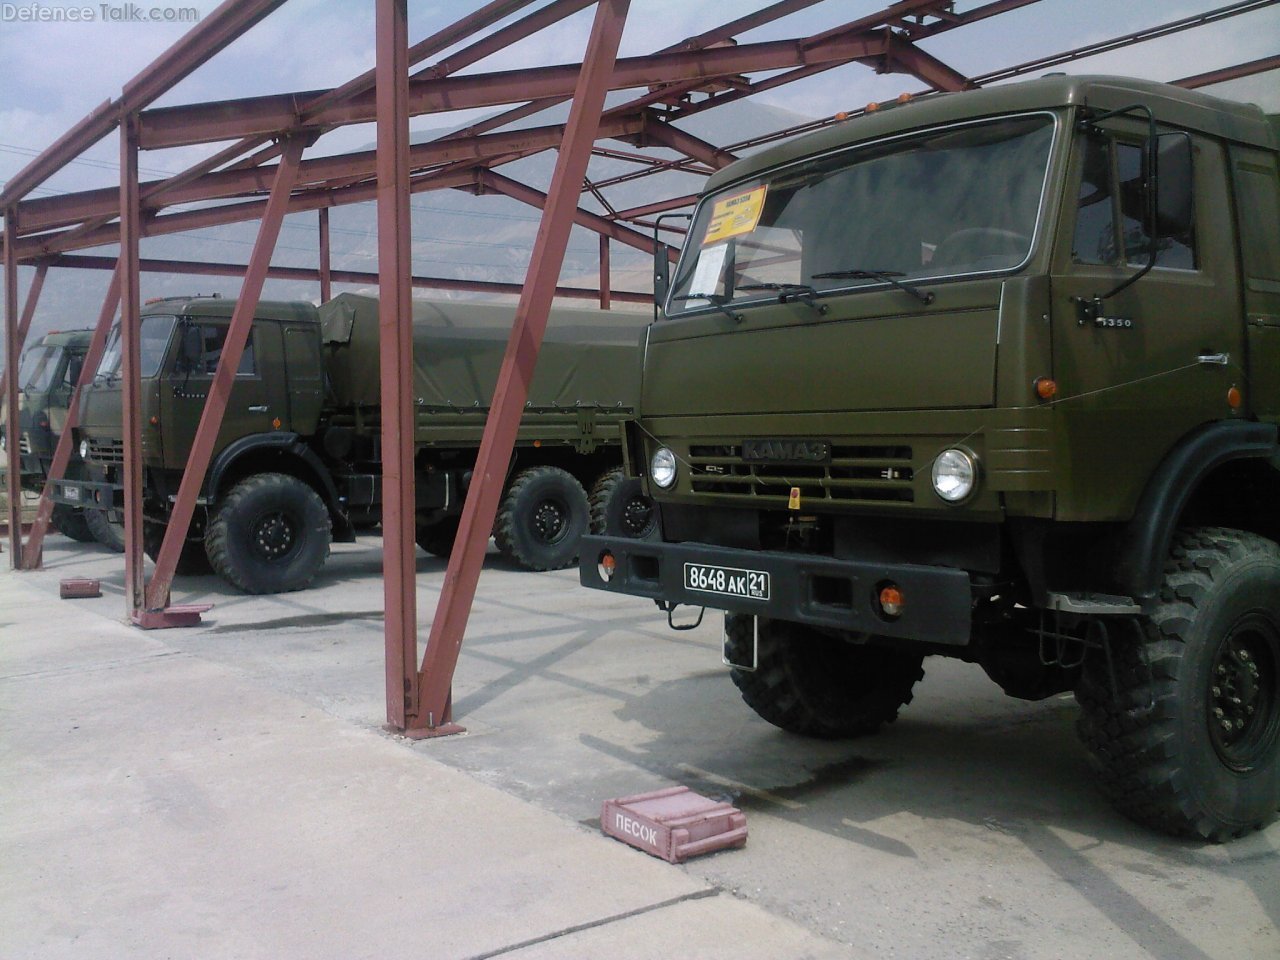 Kamaz trucks